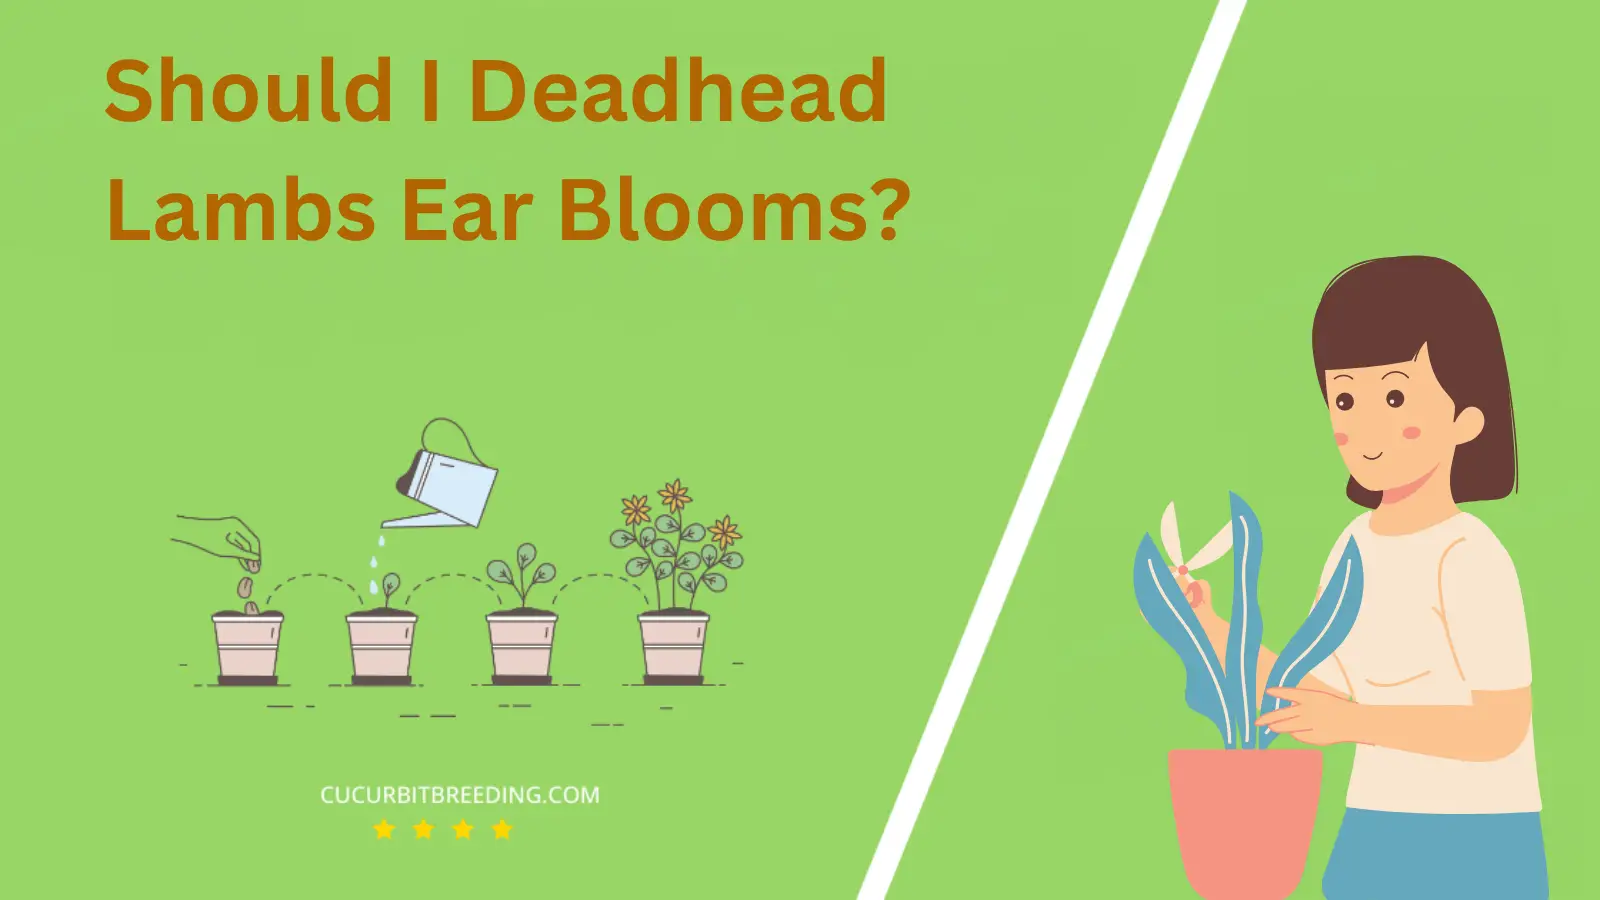 Should I Deadhead Lambs Ear Blooms?